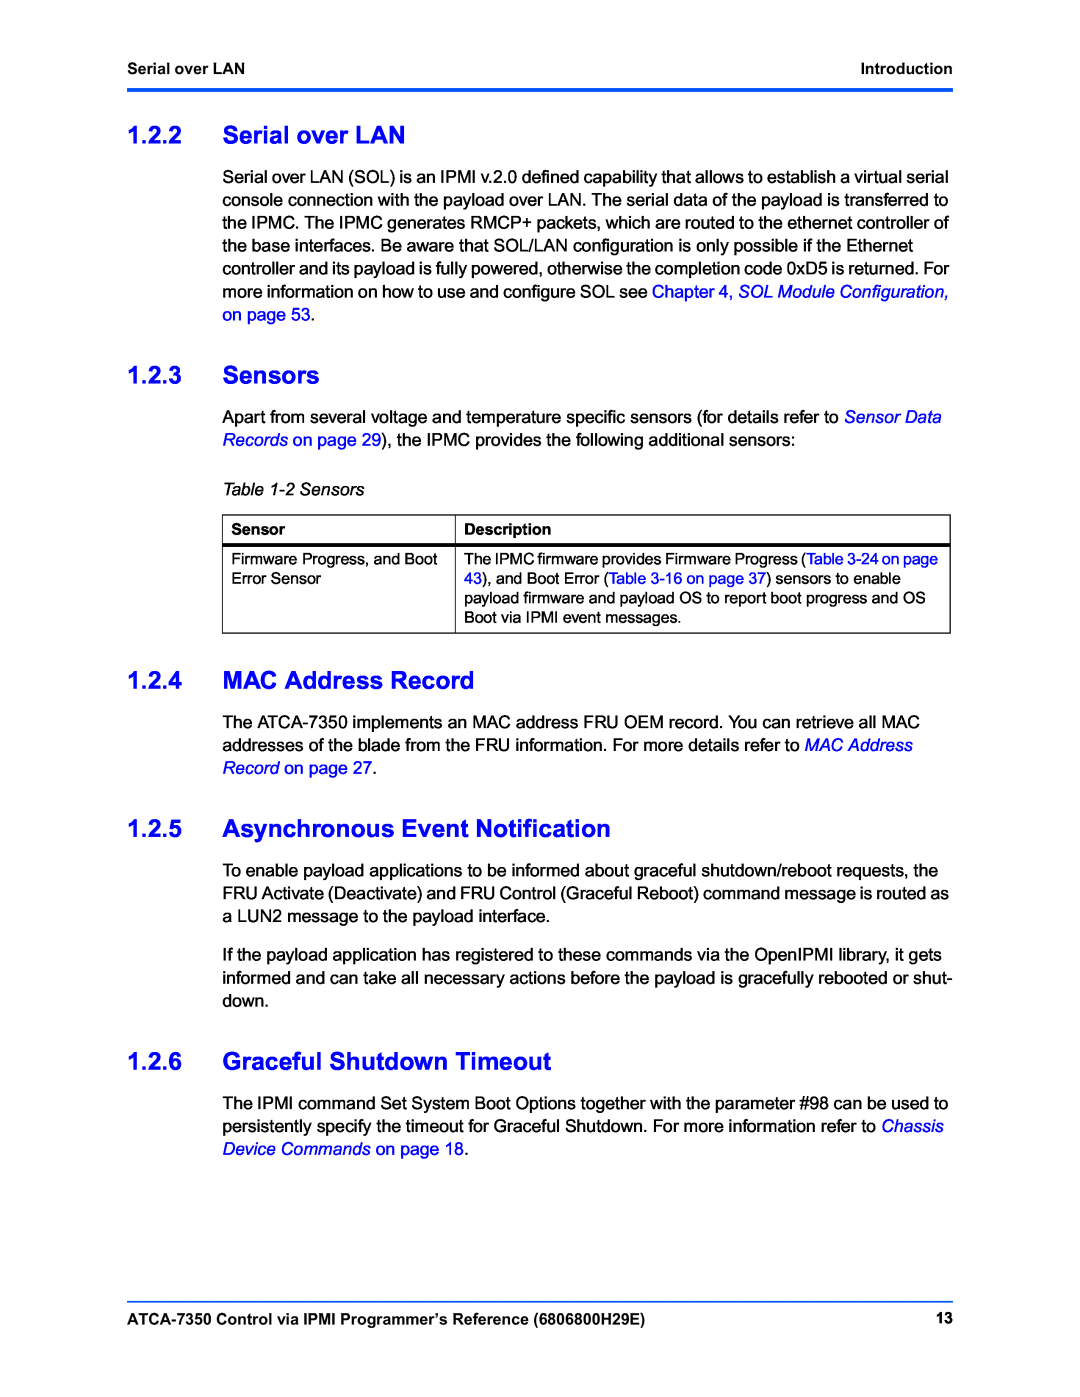 Emerson ATCA-7350 manual 1.2.2Serial over LAN, 1.2.3Sensors, 1.2.4MAC Address Record, 1.2.5Asynchronous Event Notification 